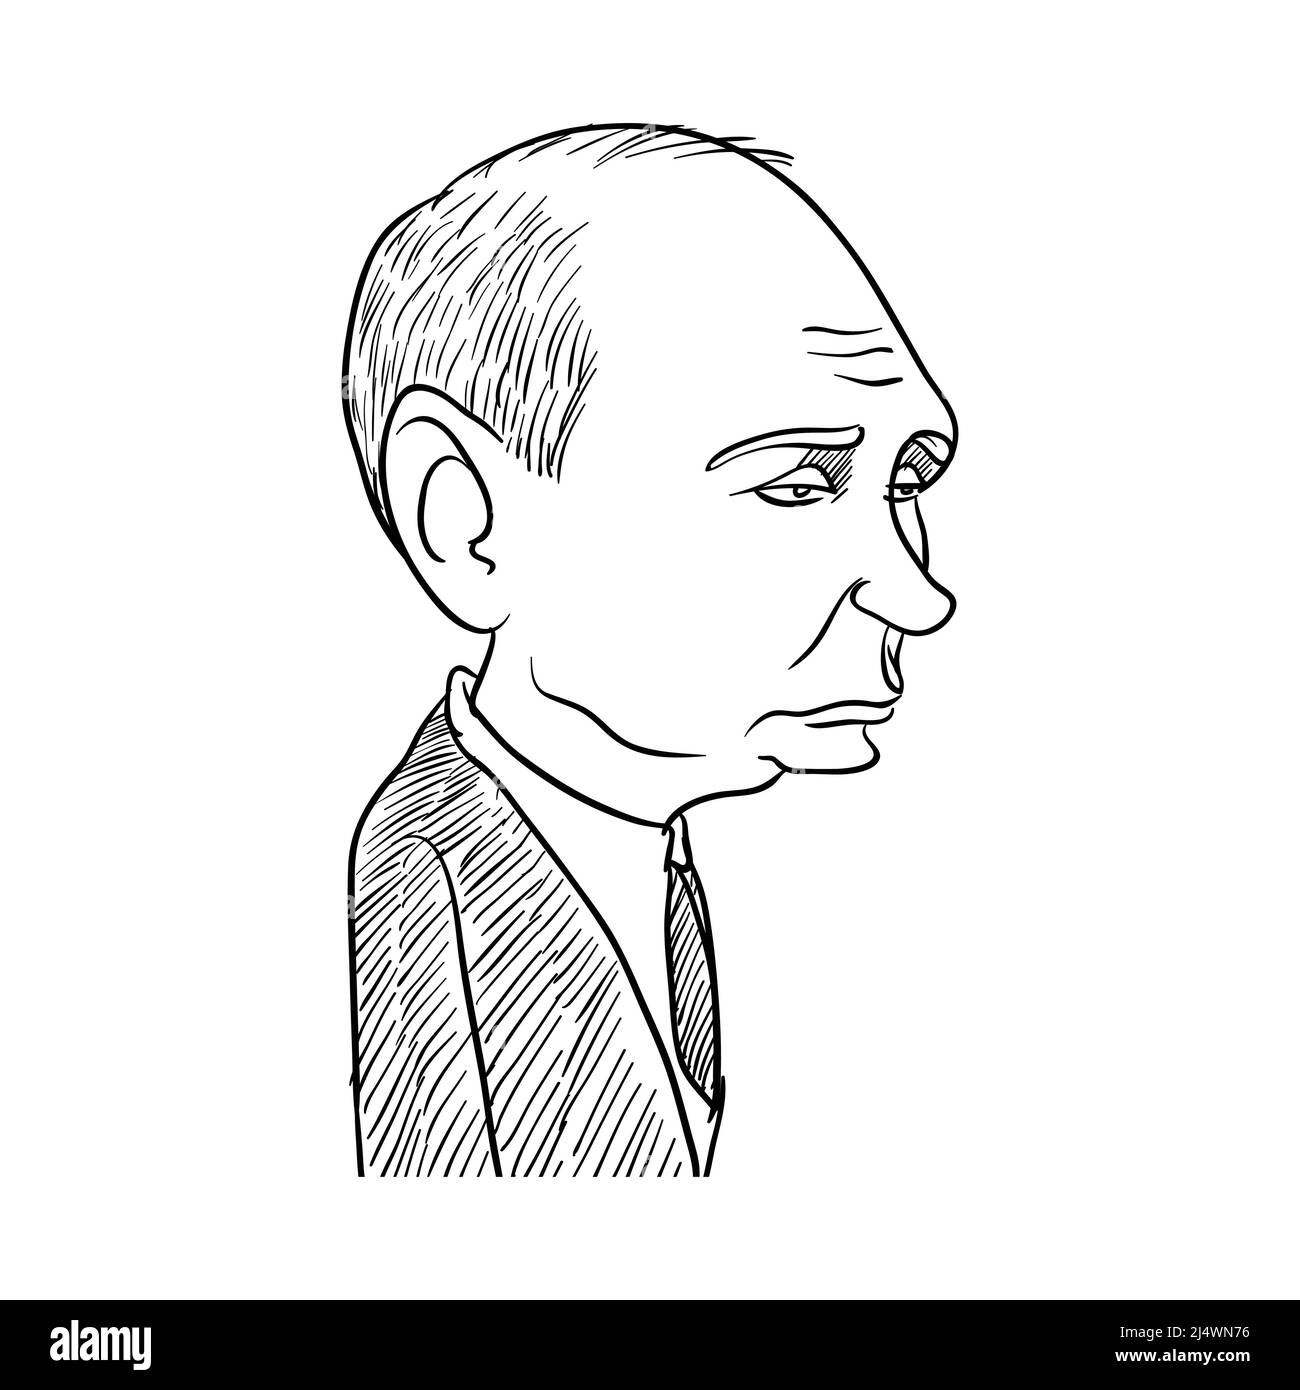 Vladimir Putin Caricature Illustration  Vector Stock Vector